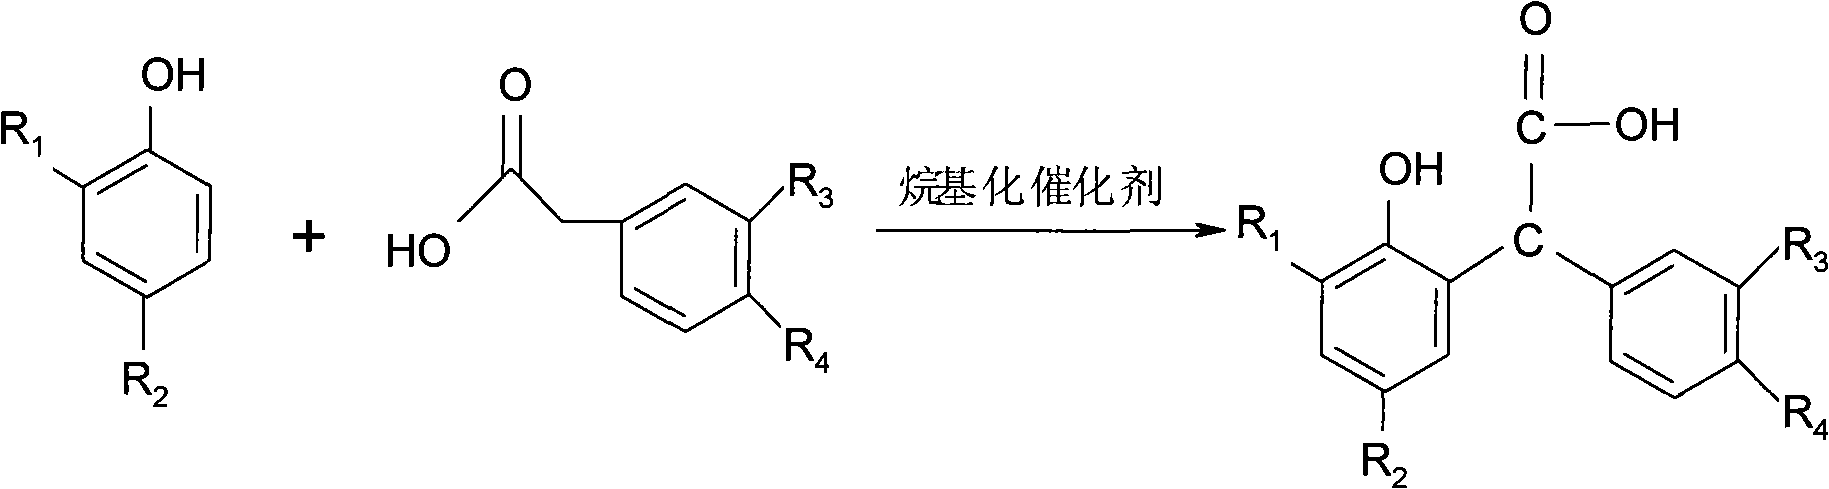 Method for preparing 3-arylbenzofuran ketone compounds